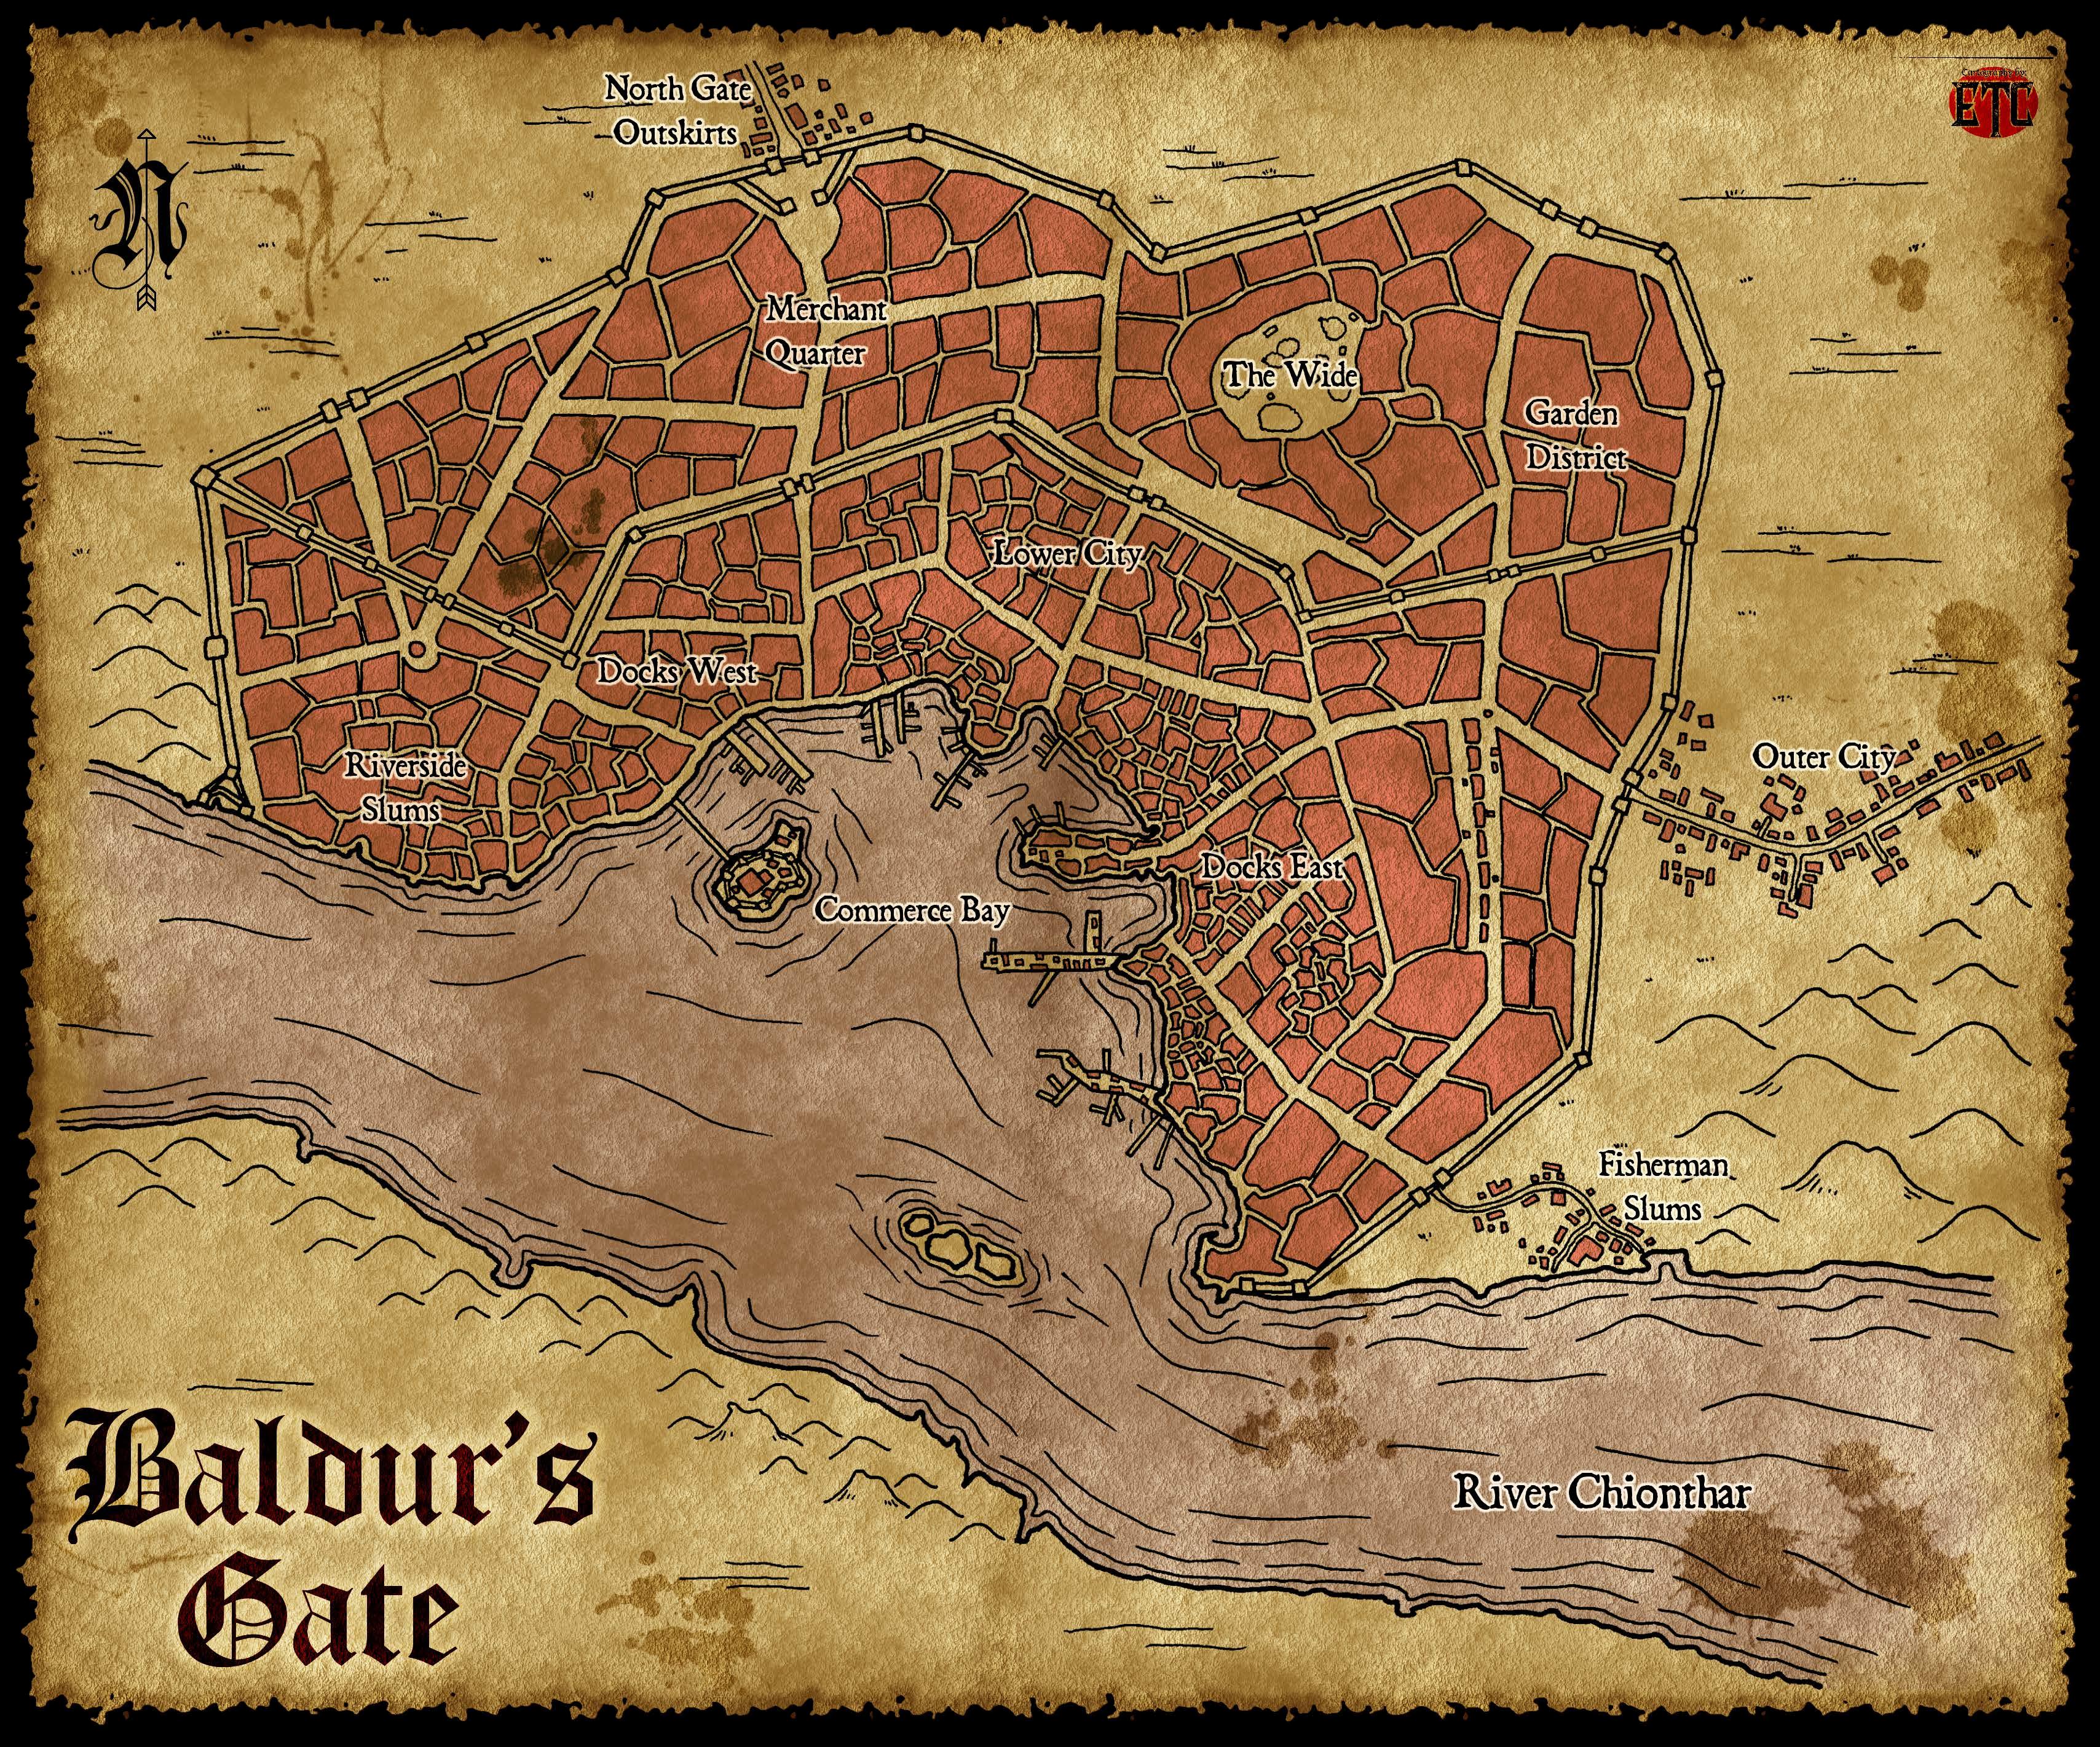 Baldur's Gate.